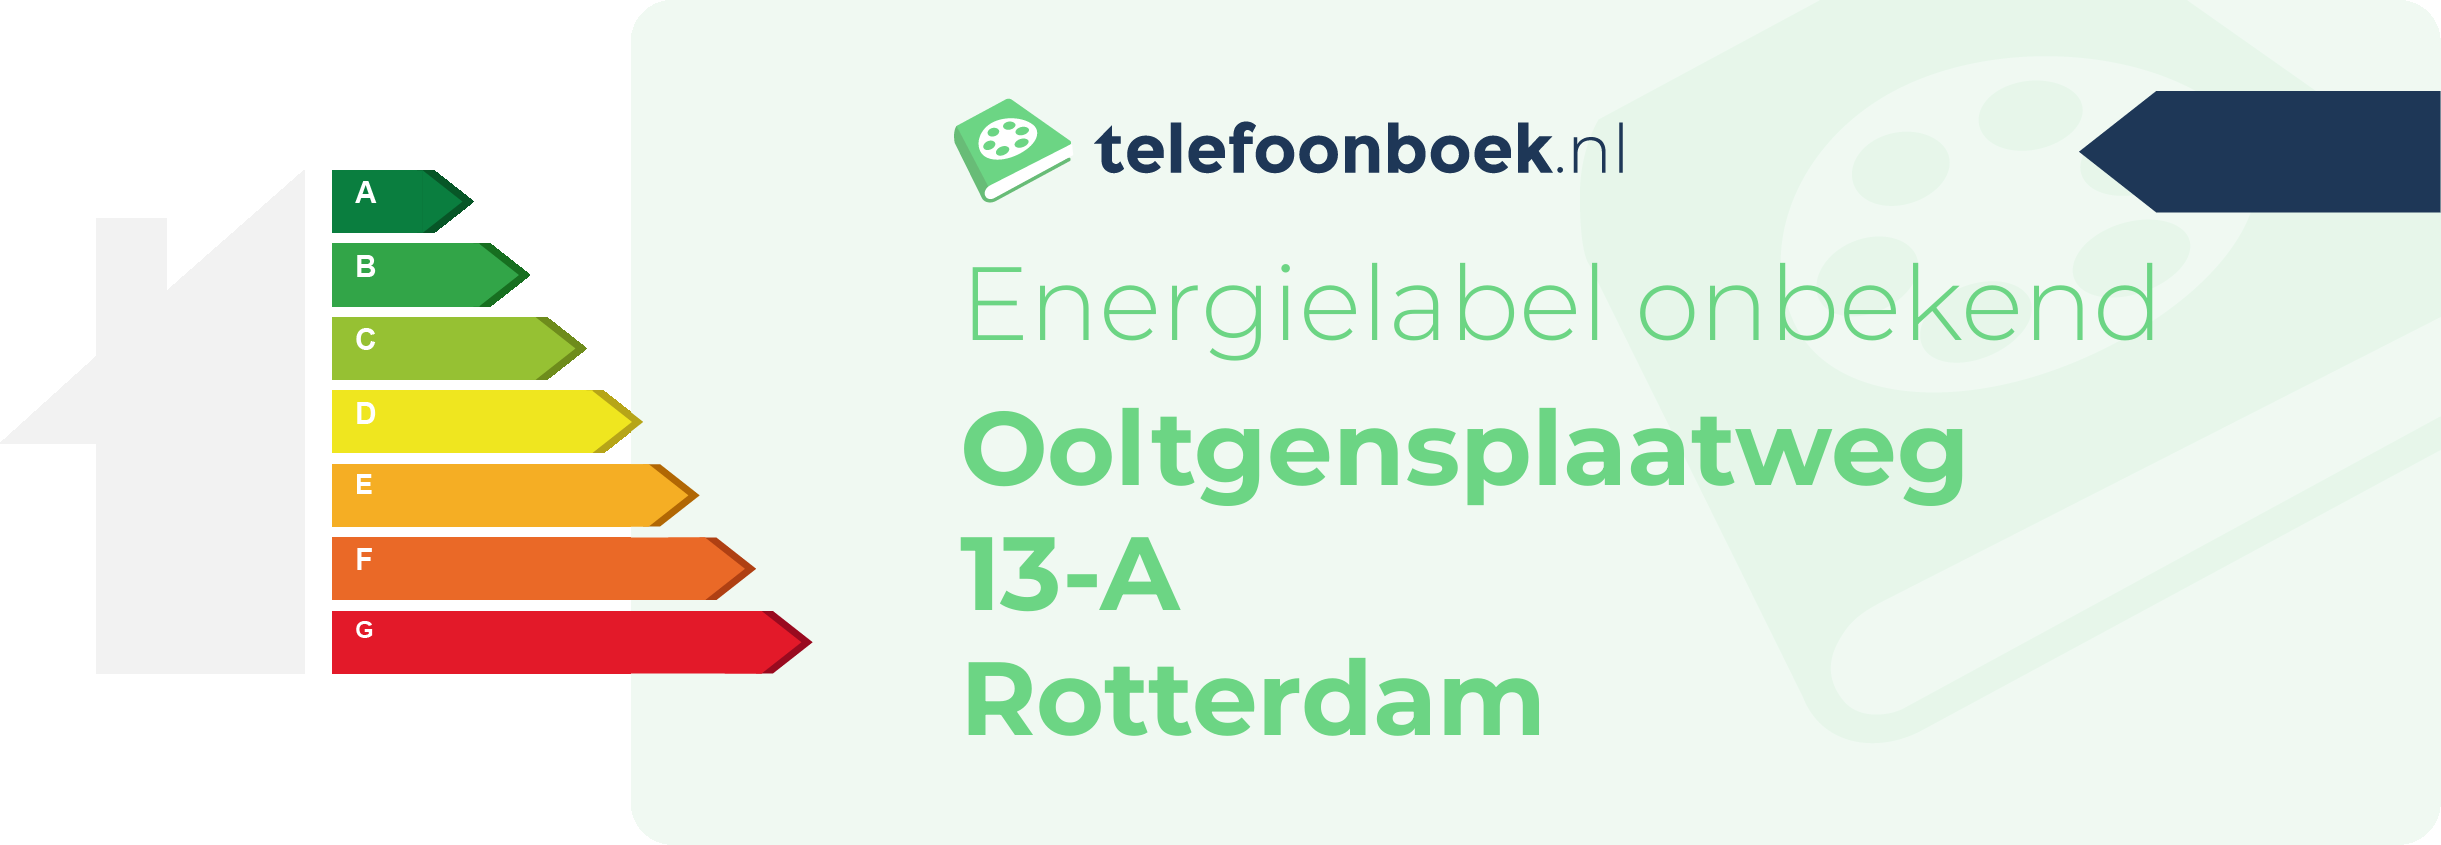 Energielabel Ooltgensplaatweg 13-A Rotterdam